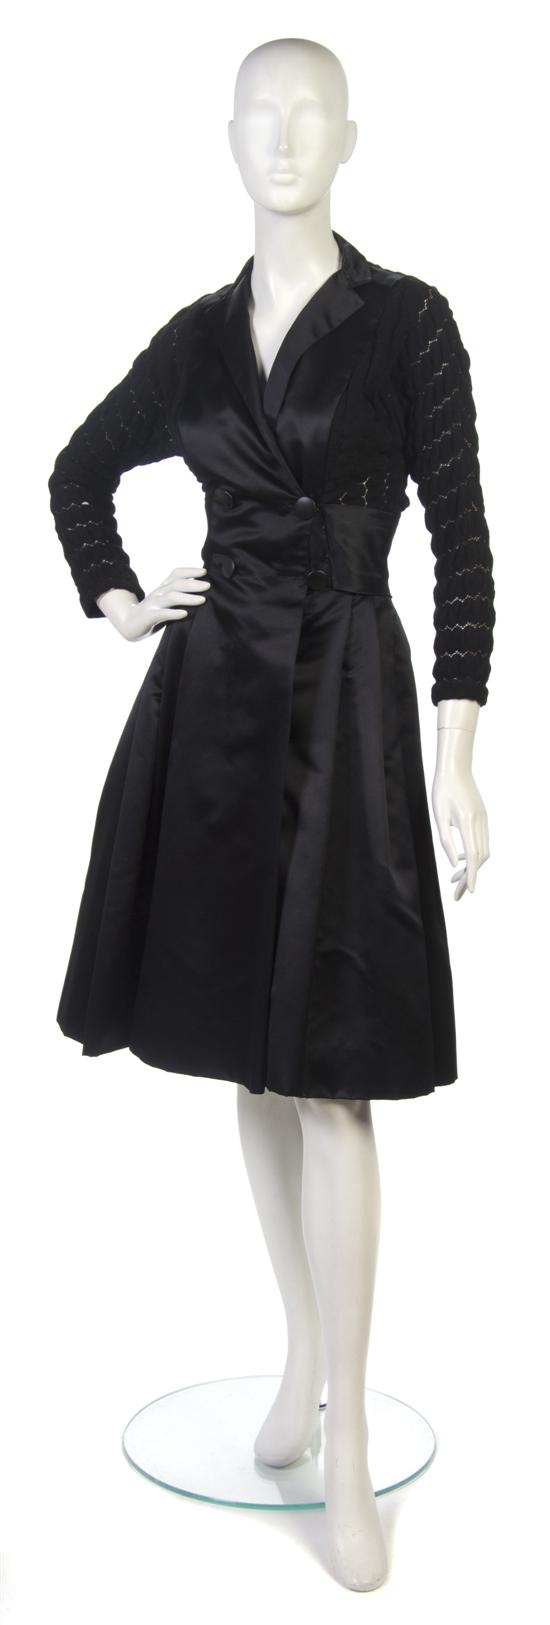 A Dan Werle Black Evening Dress.